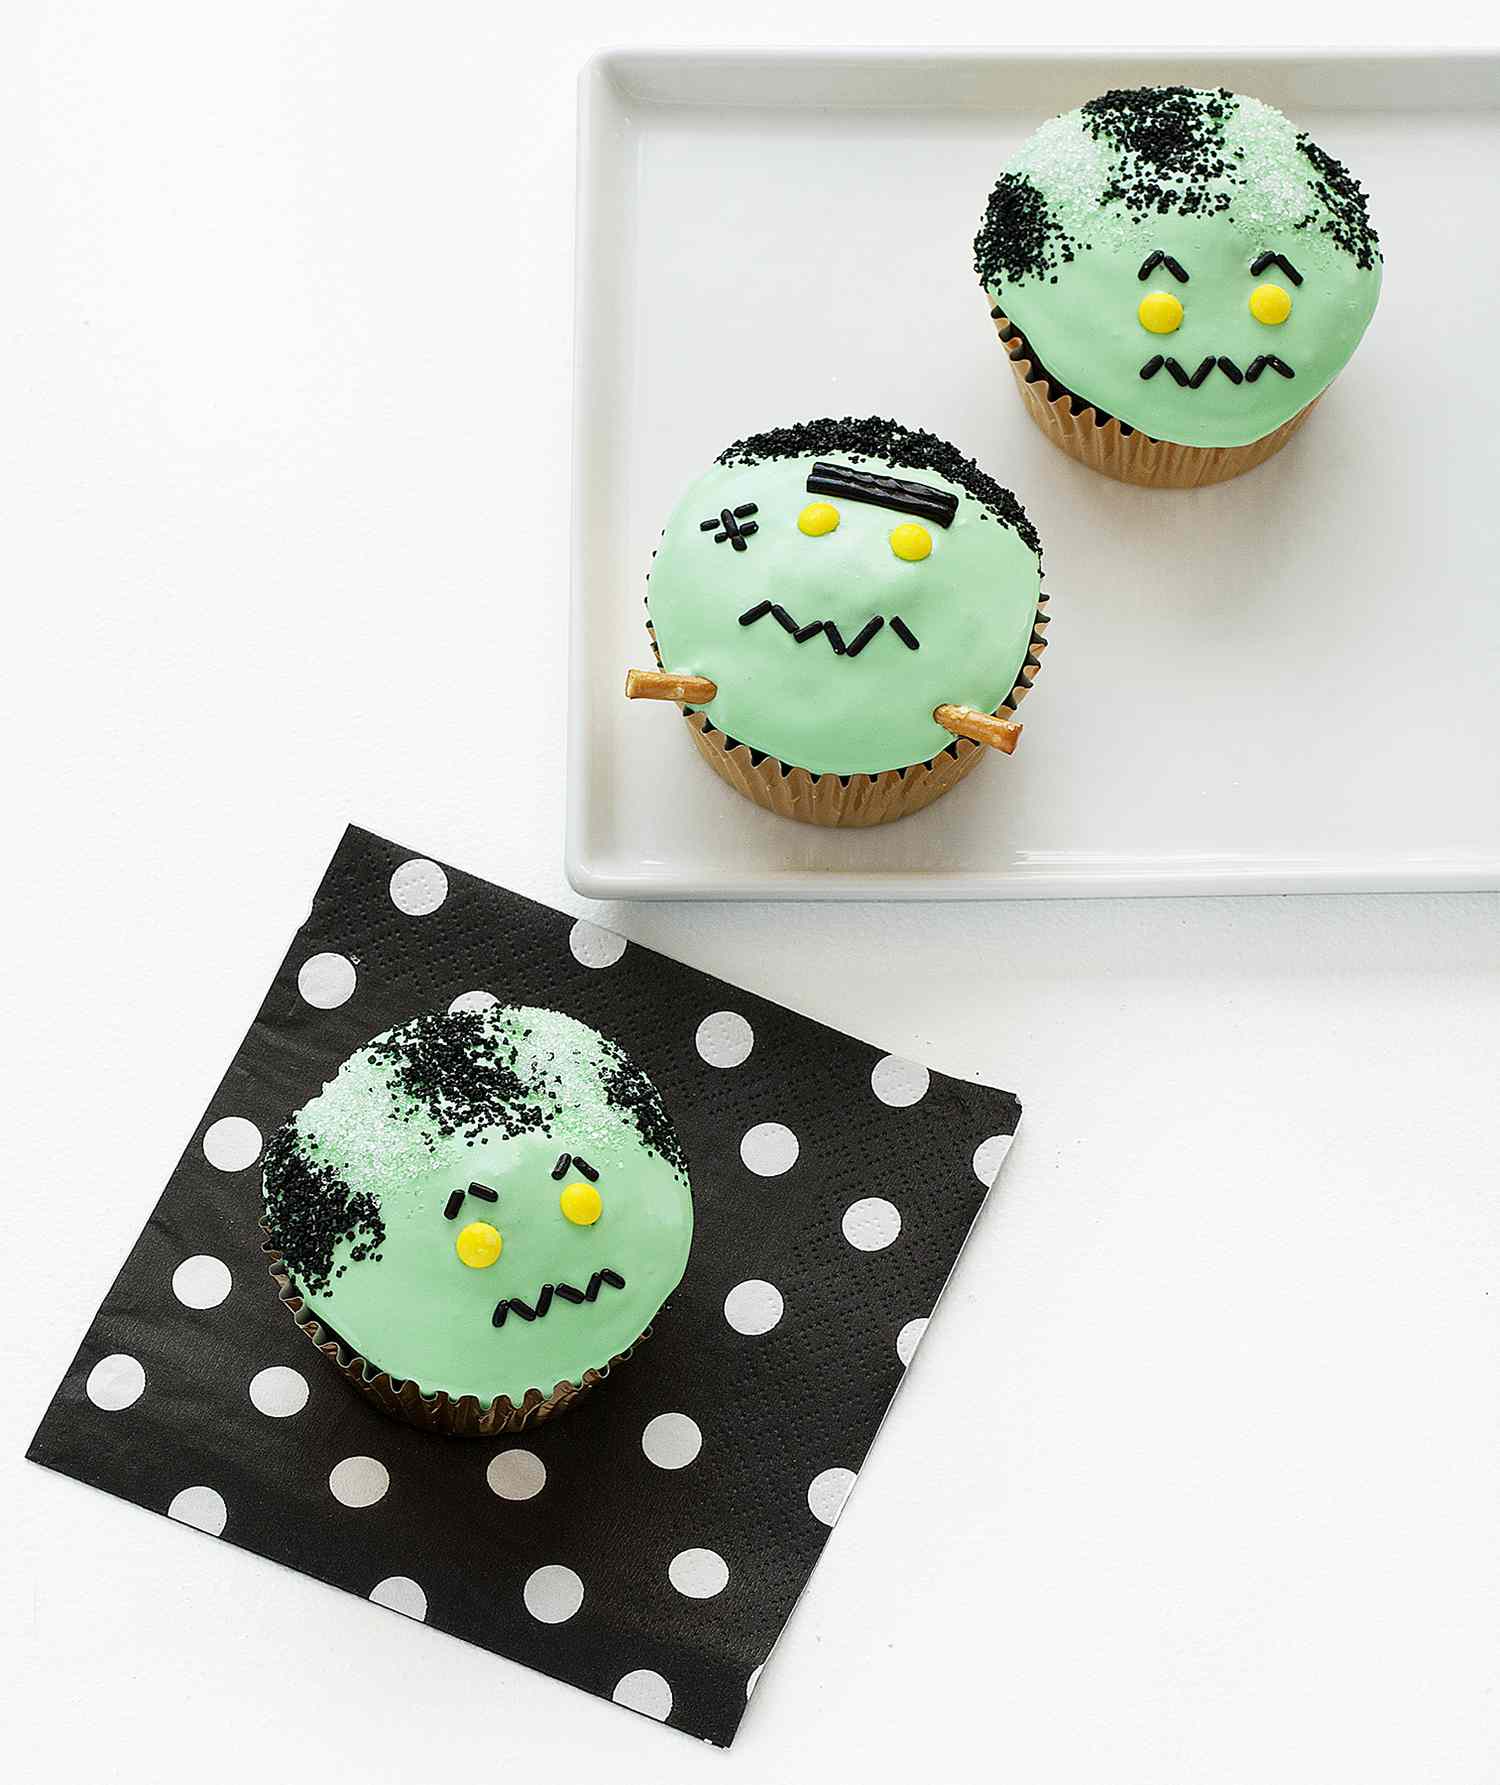 Bride of Frankenstein's Monster Cupcakes